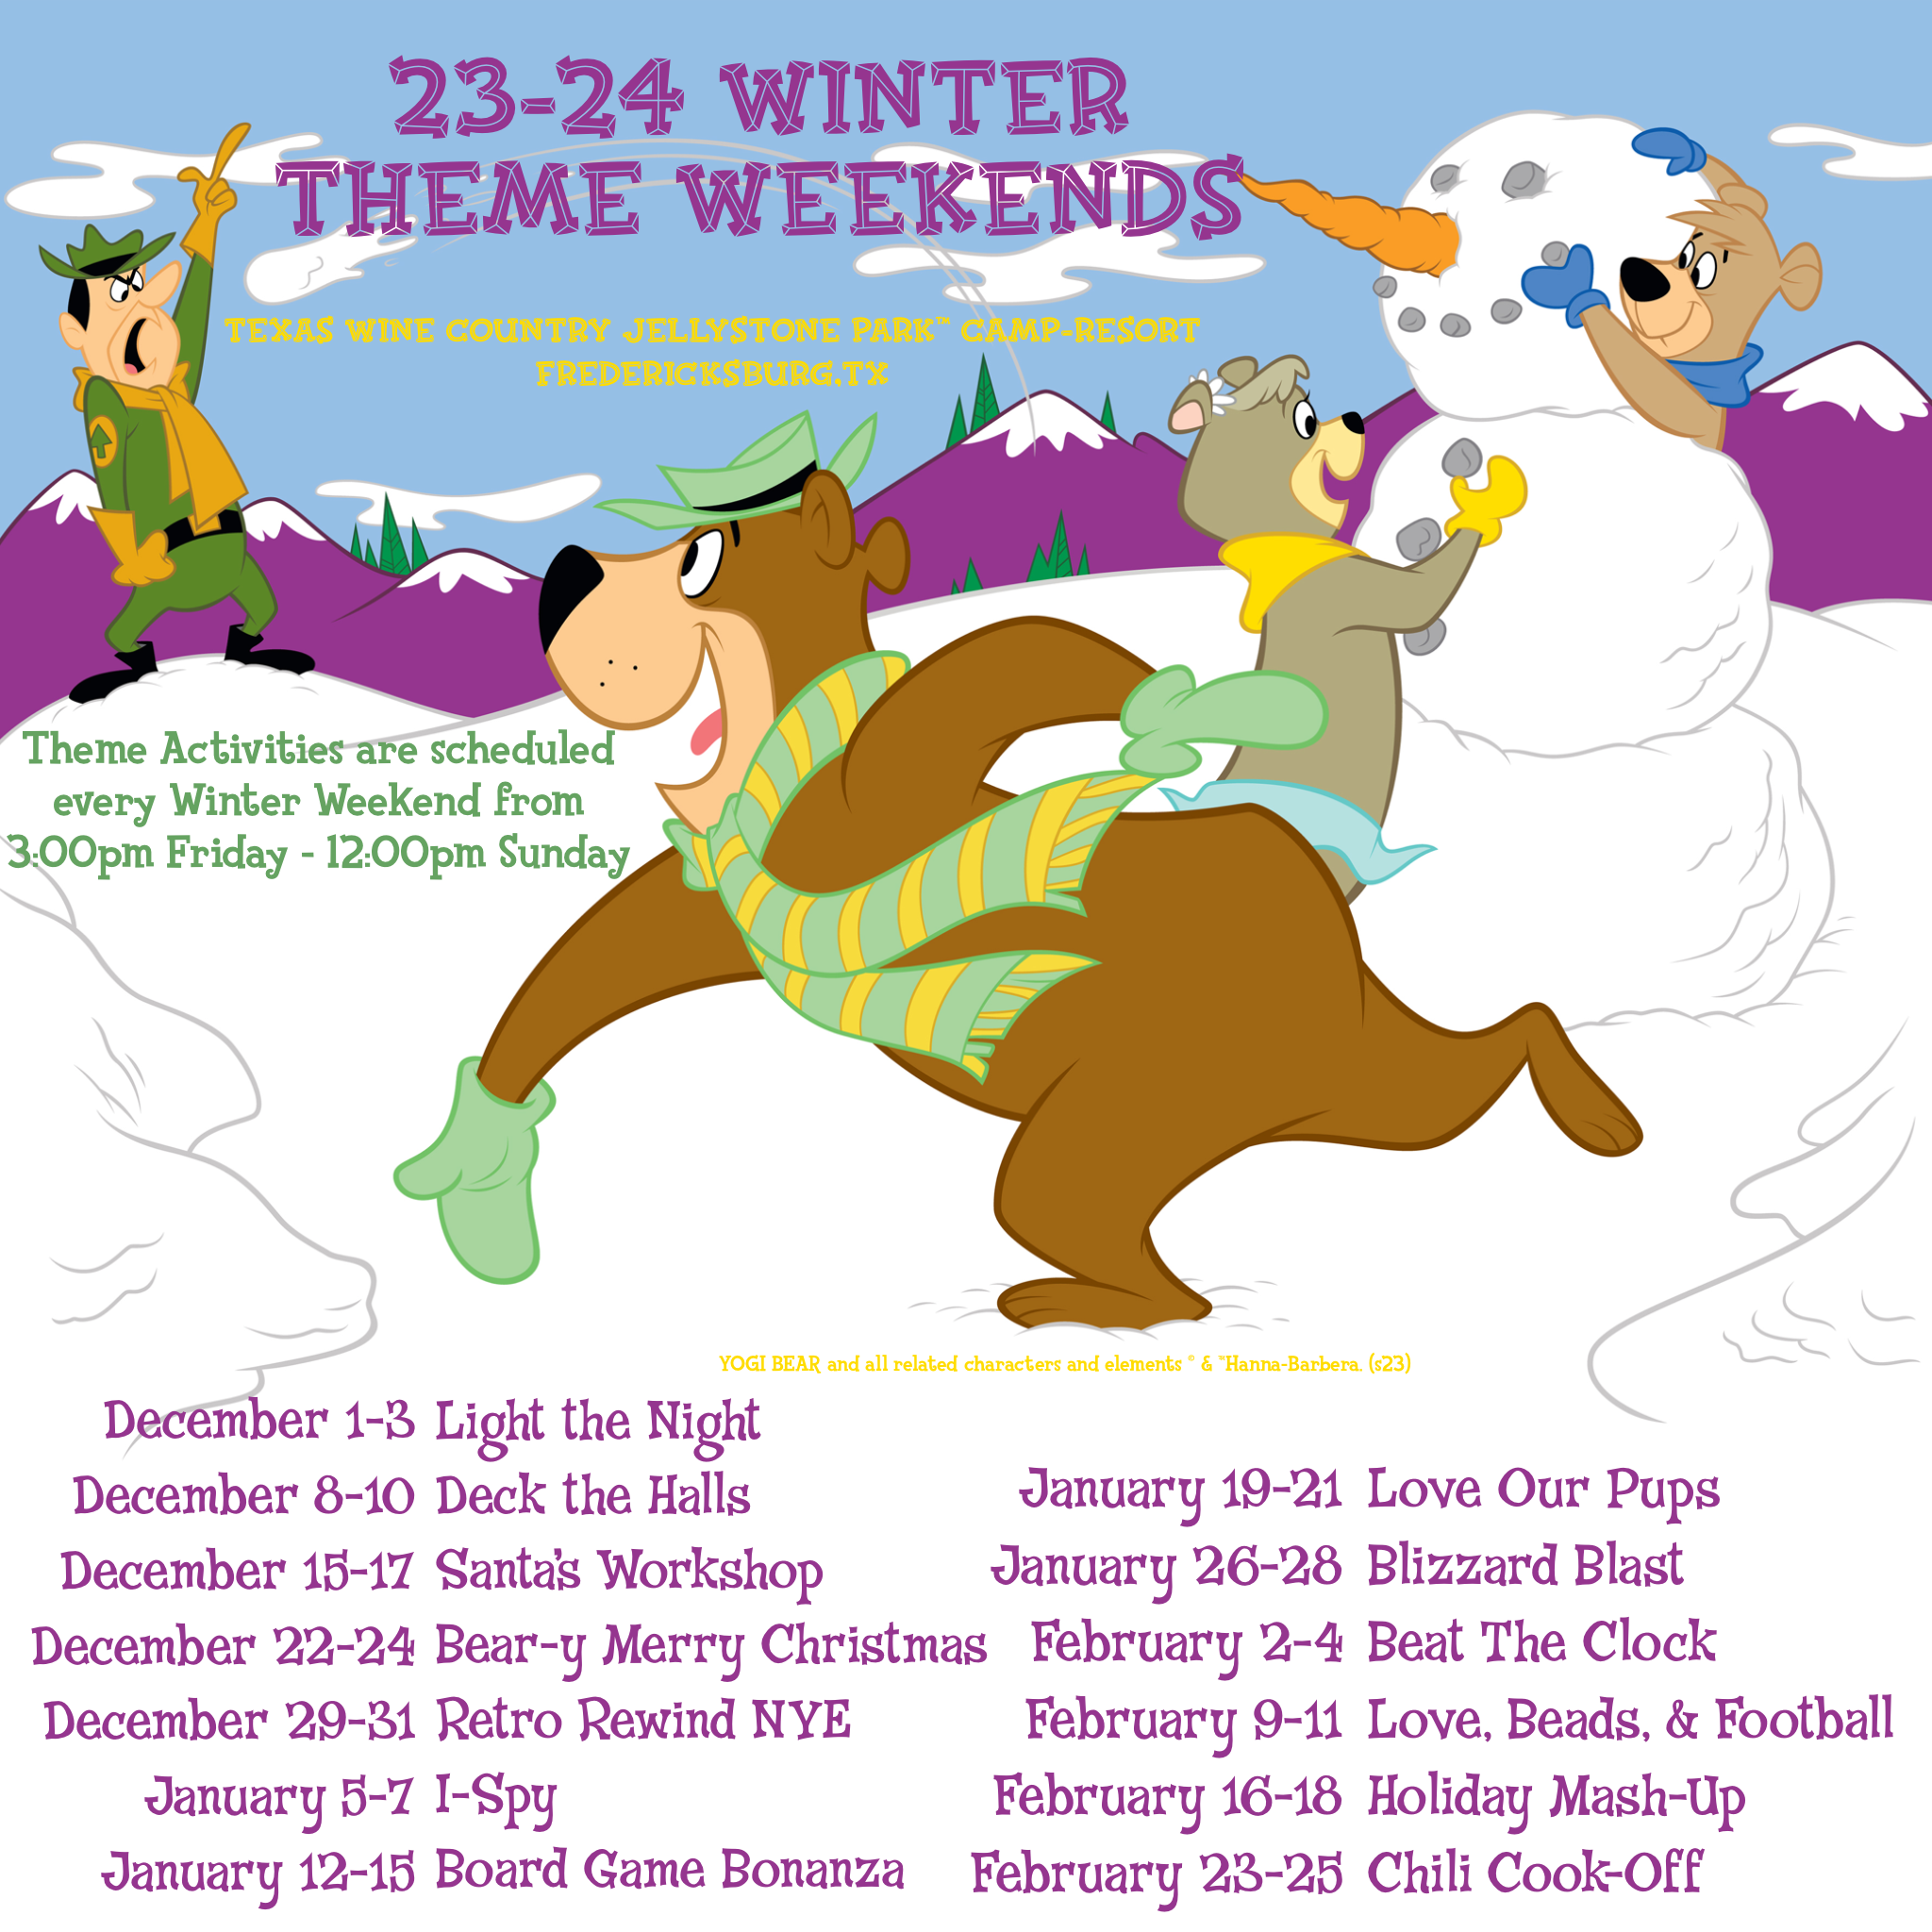 2023 Winter Theme Weekends List